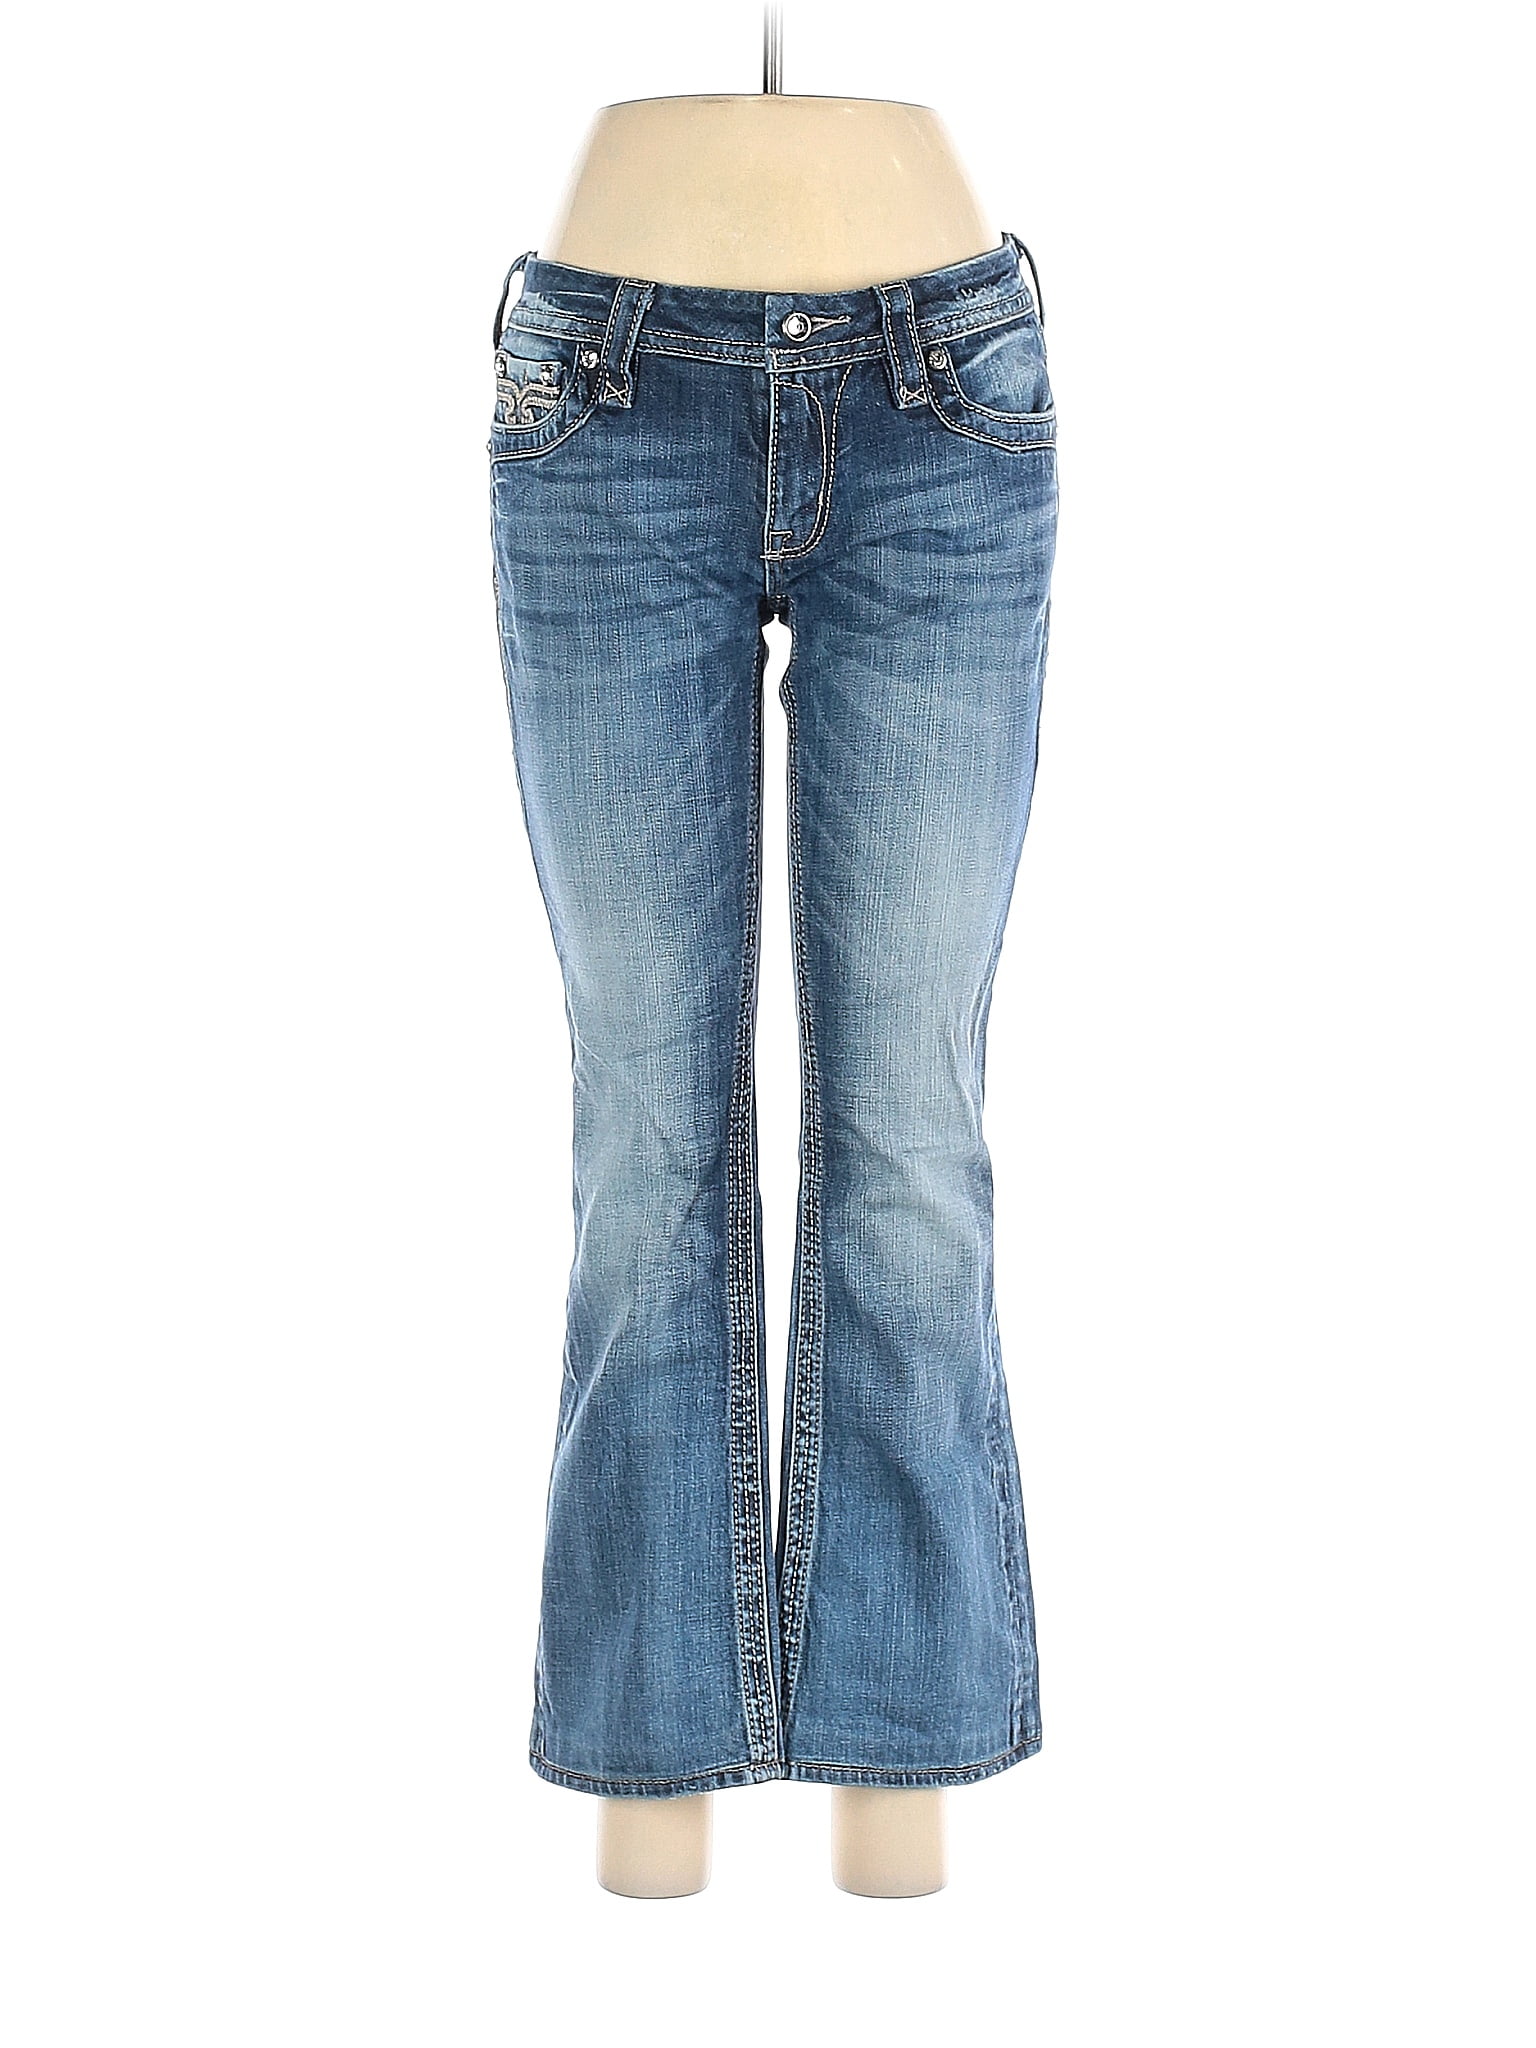 Rock Revival Blue Jeans 29 Waist - 69% off | thredUP